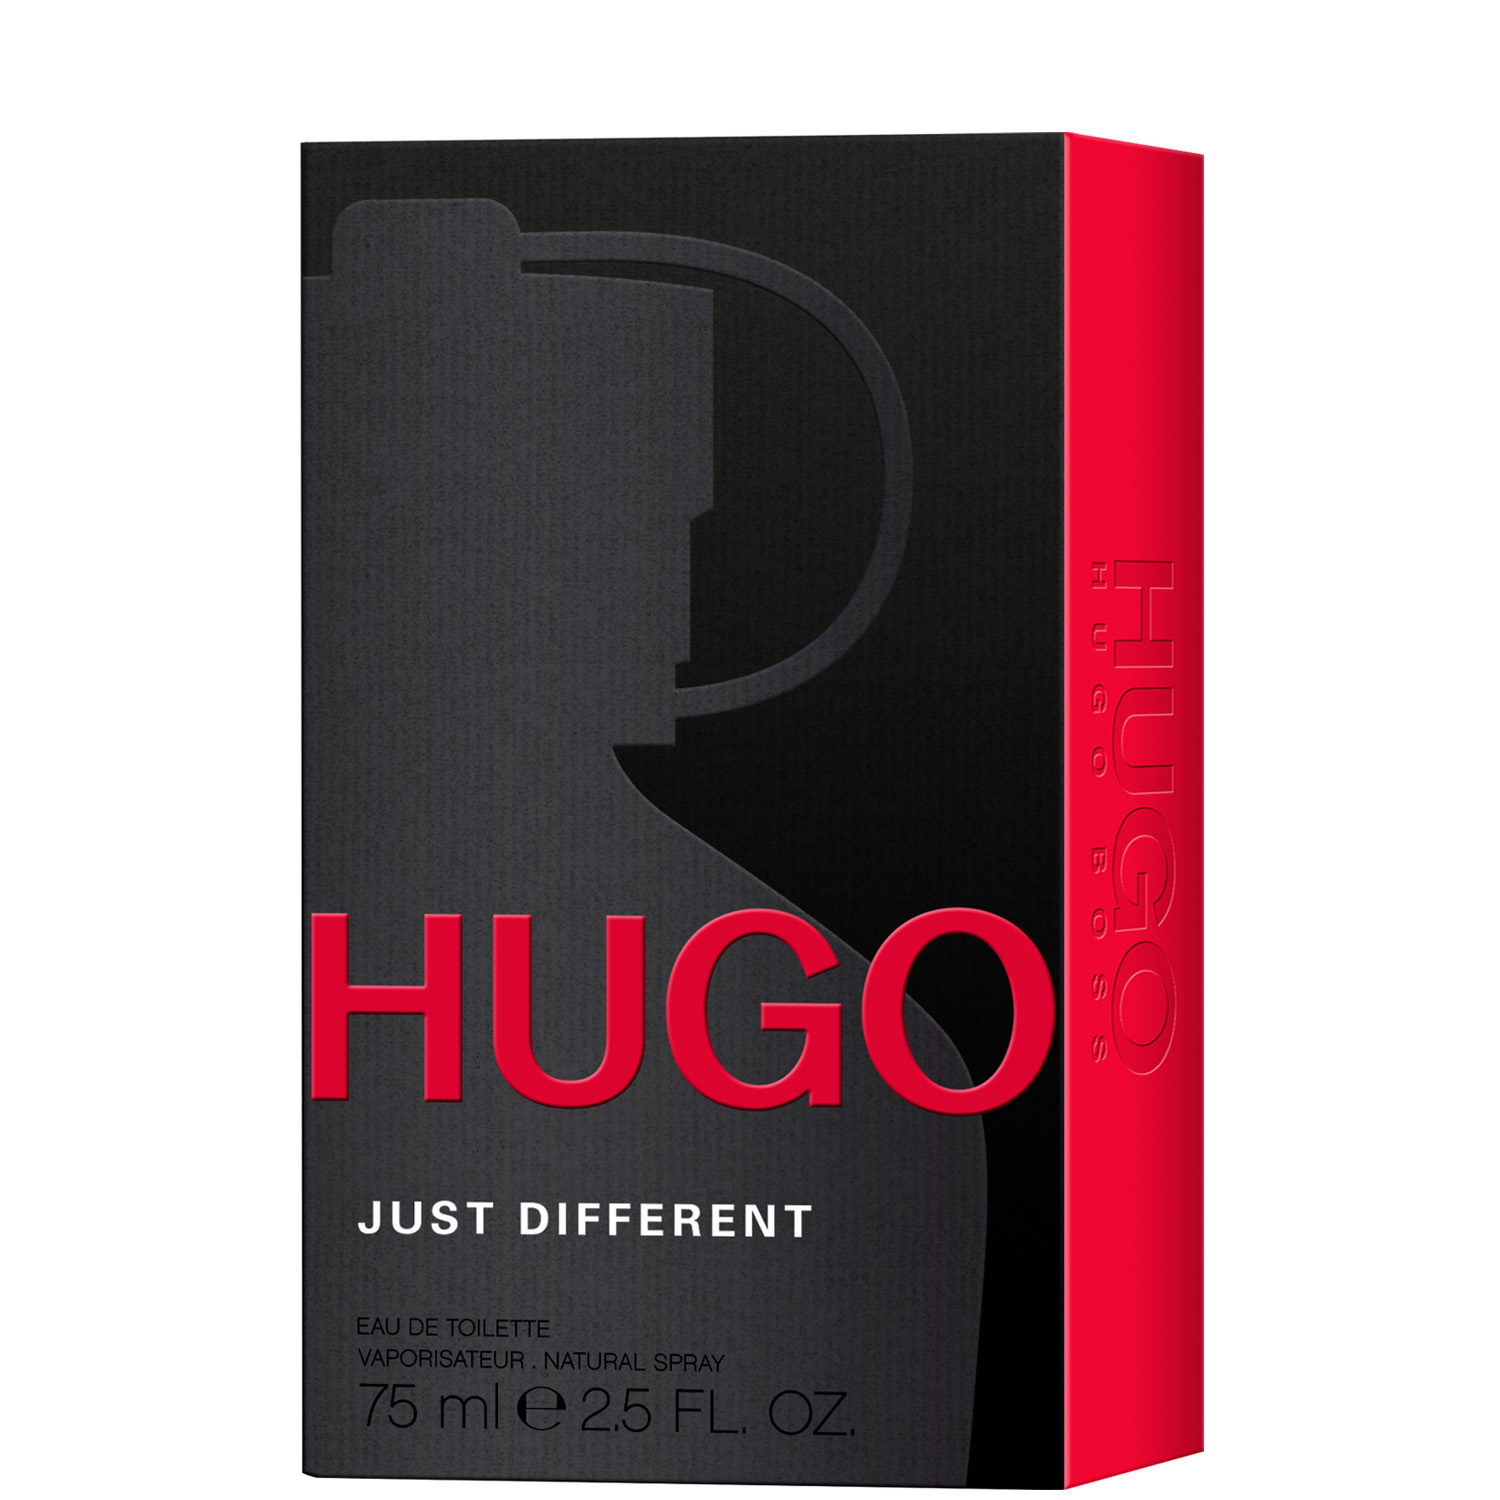 Hugo Boss Hugo Just Different Eau de Toilette 2021 75ml